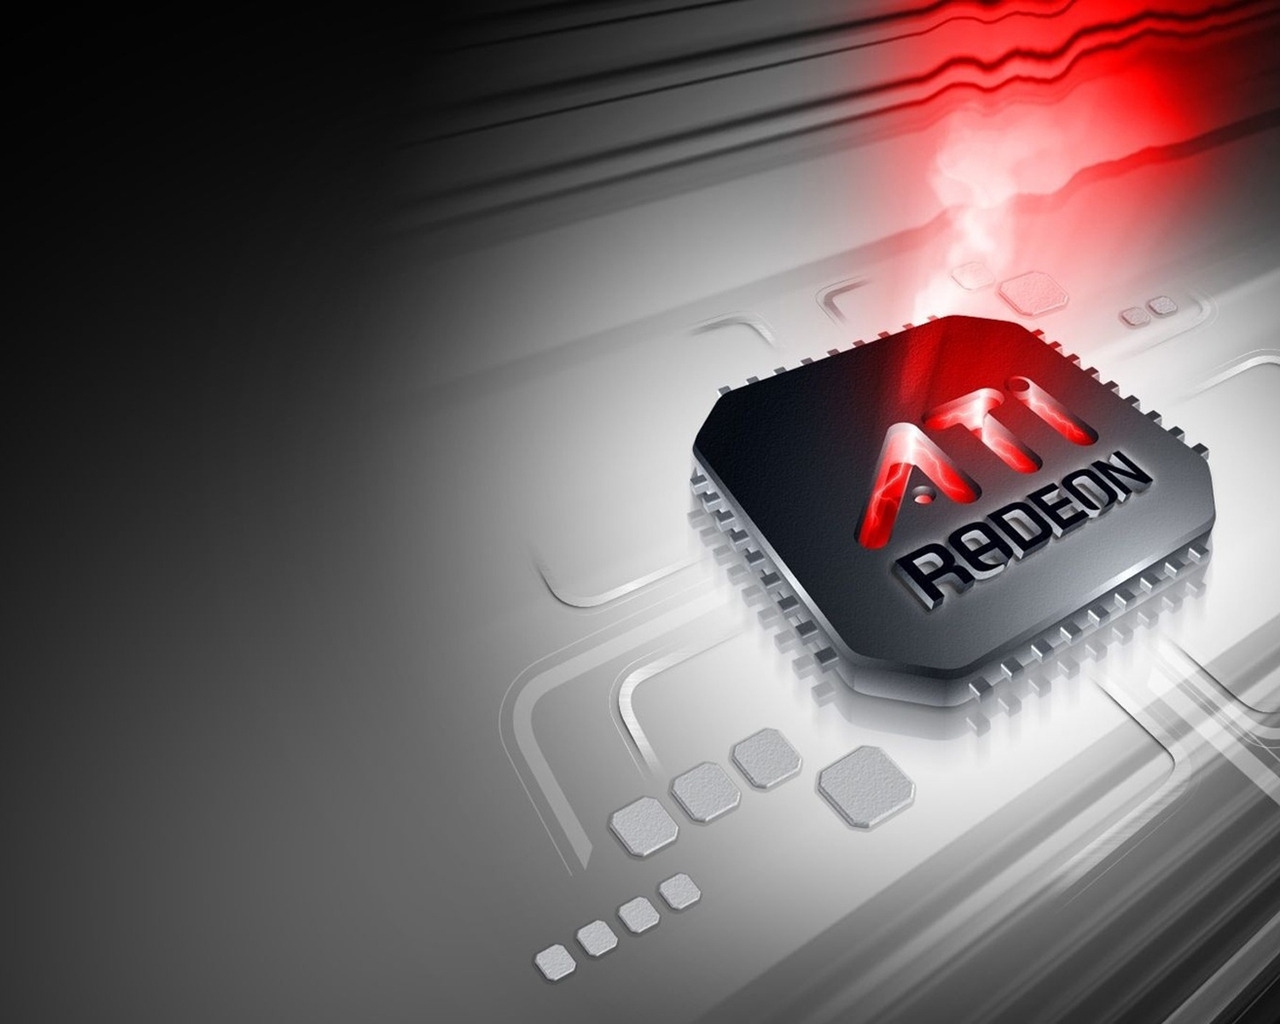 ATI Radeon for 1280 x 1024 resolution